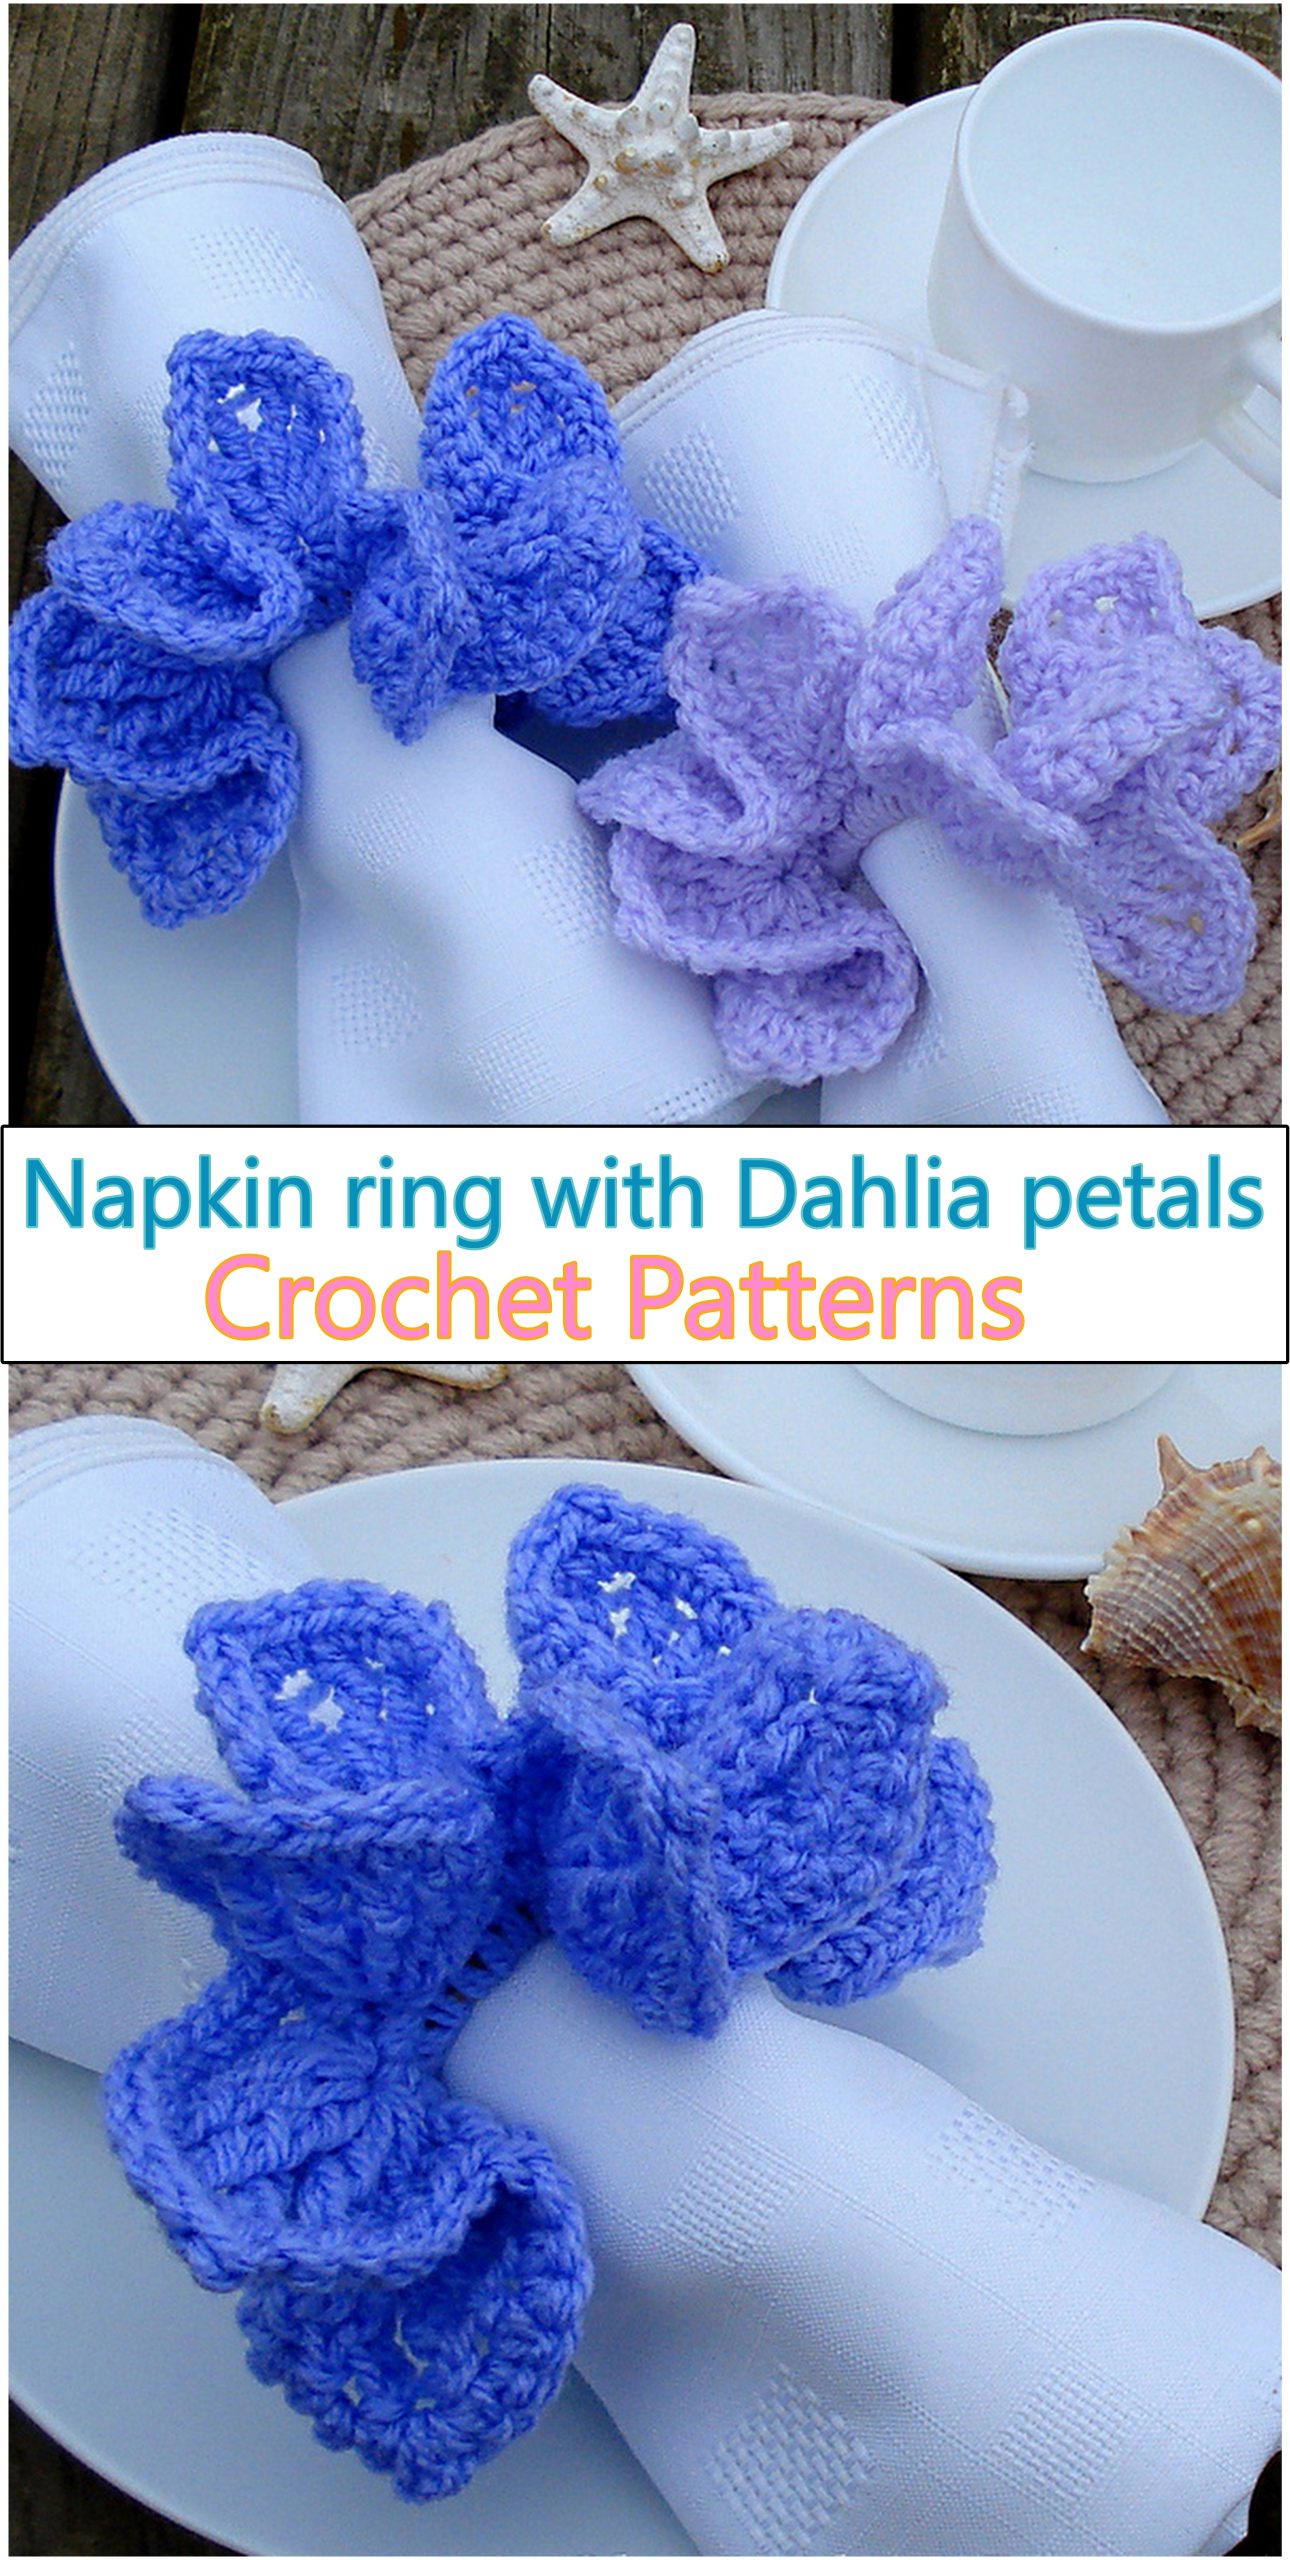 Napkin ring with Dahlia petals